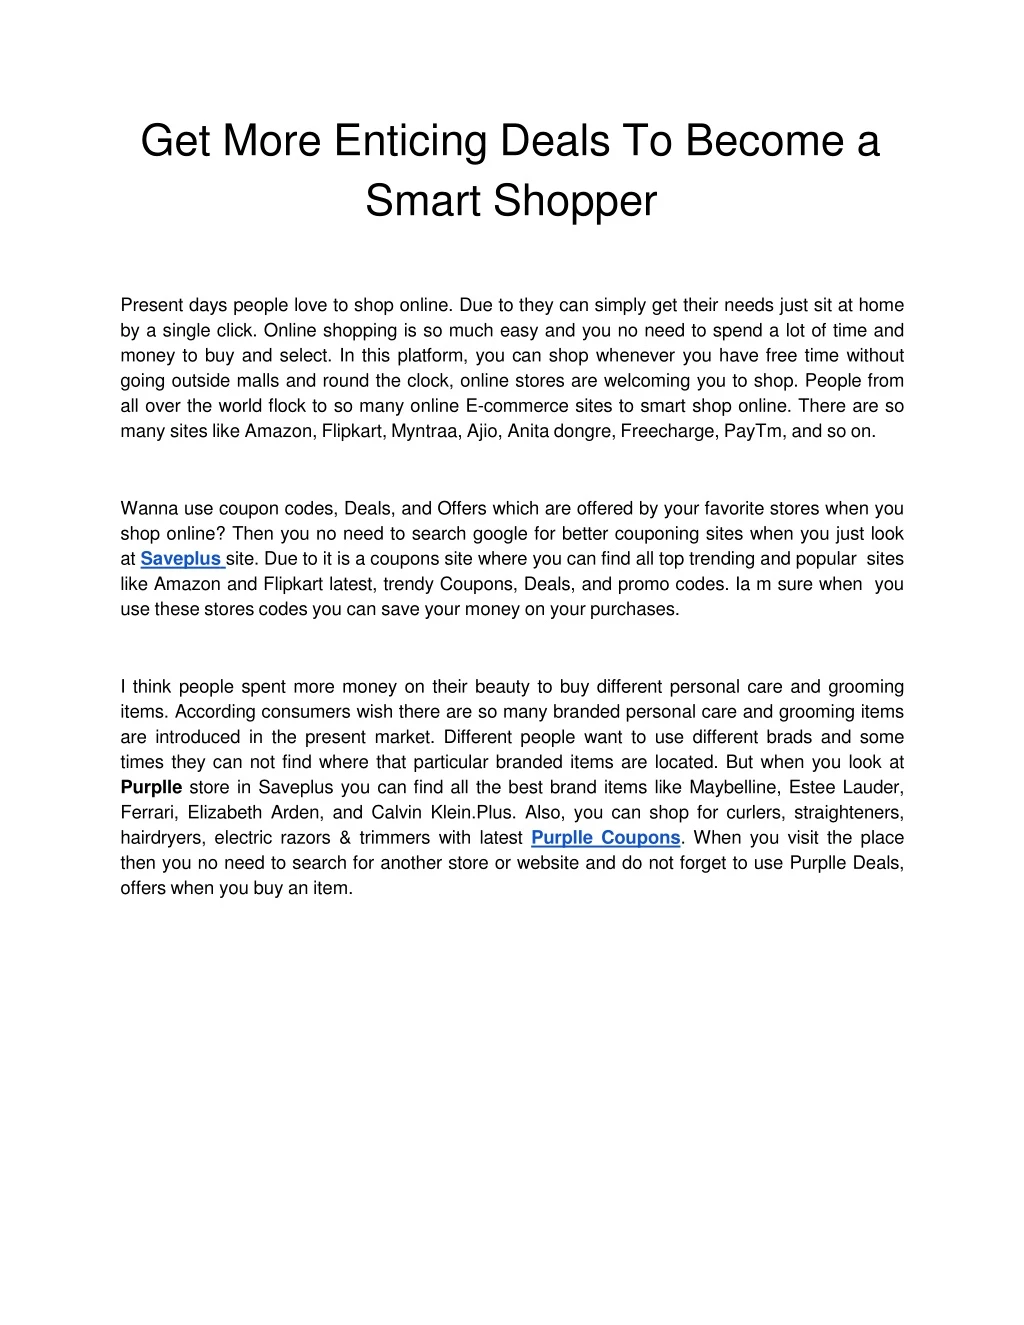 get more enticing deals to become a smart shopper